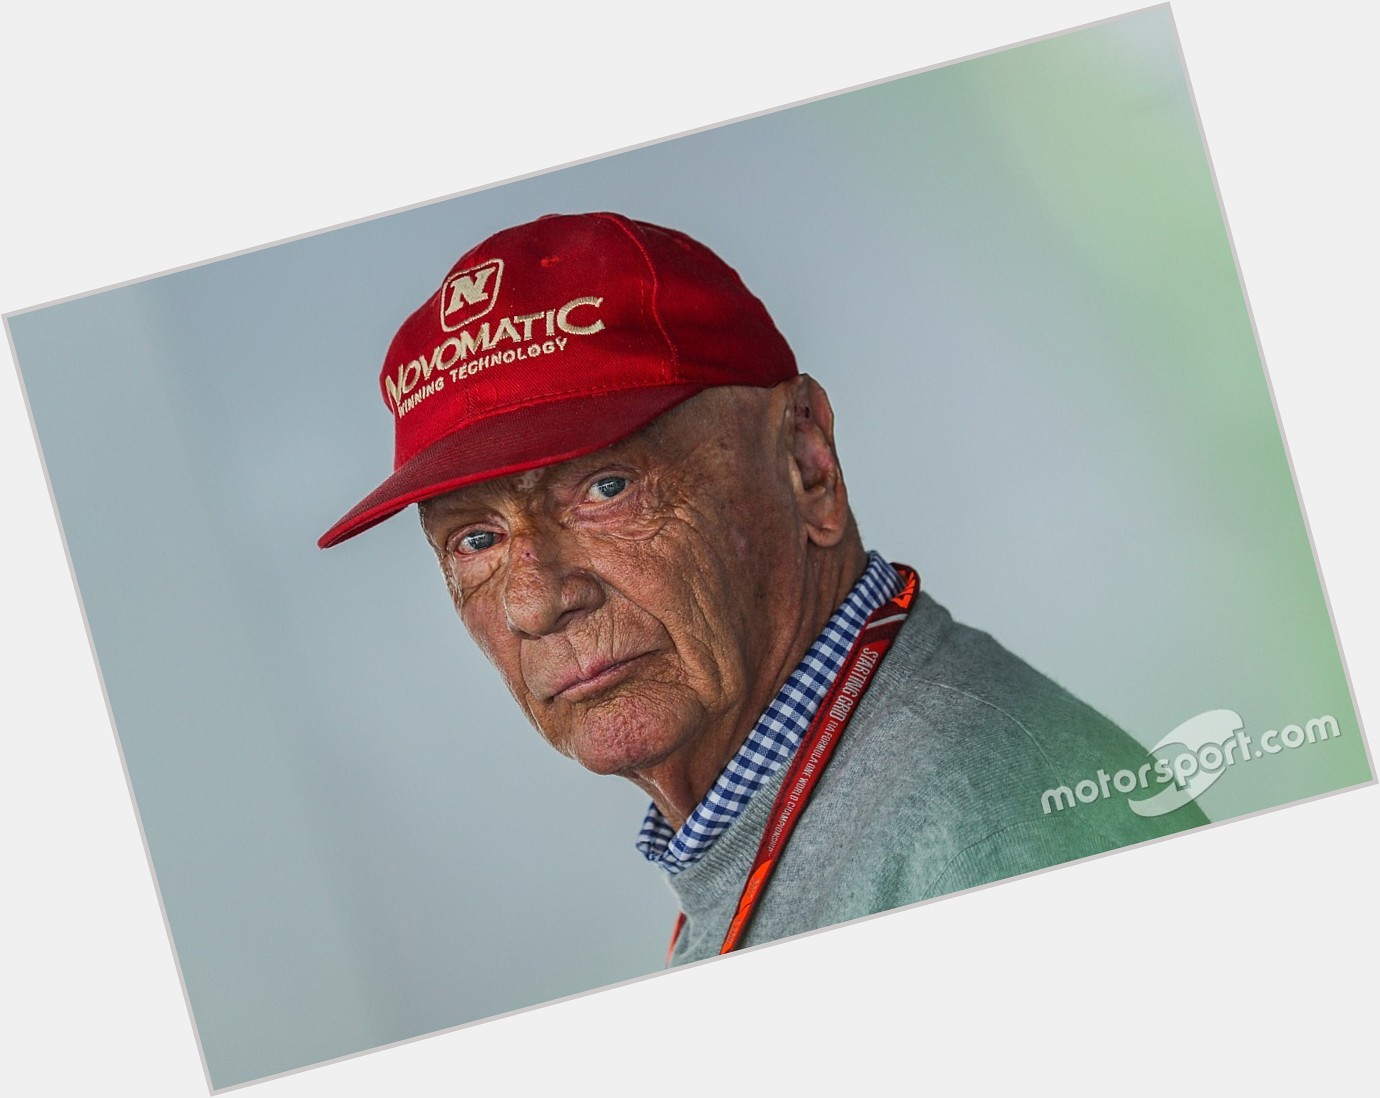  Happy birthday to Niki Lauda, the racing legend and all-round badass! 